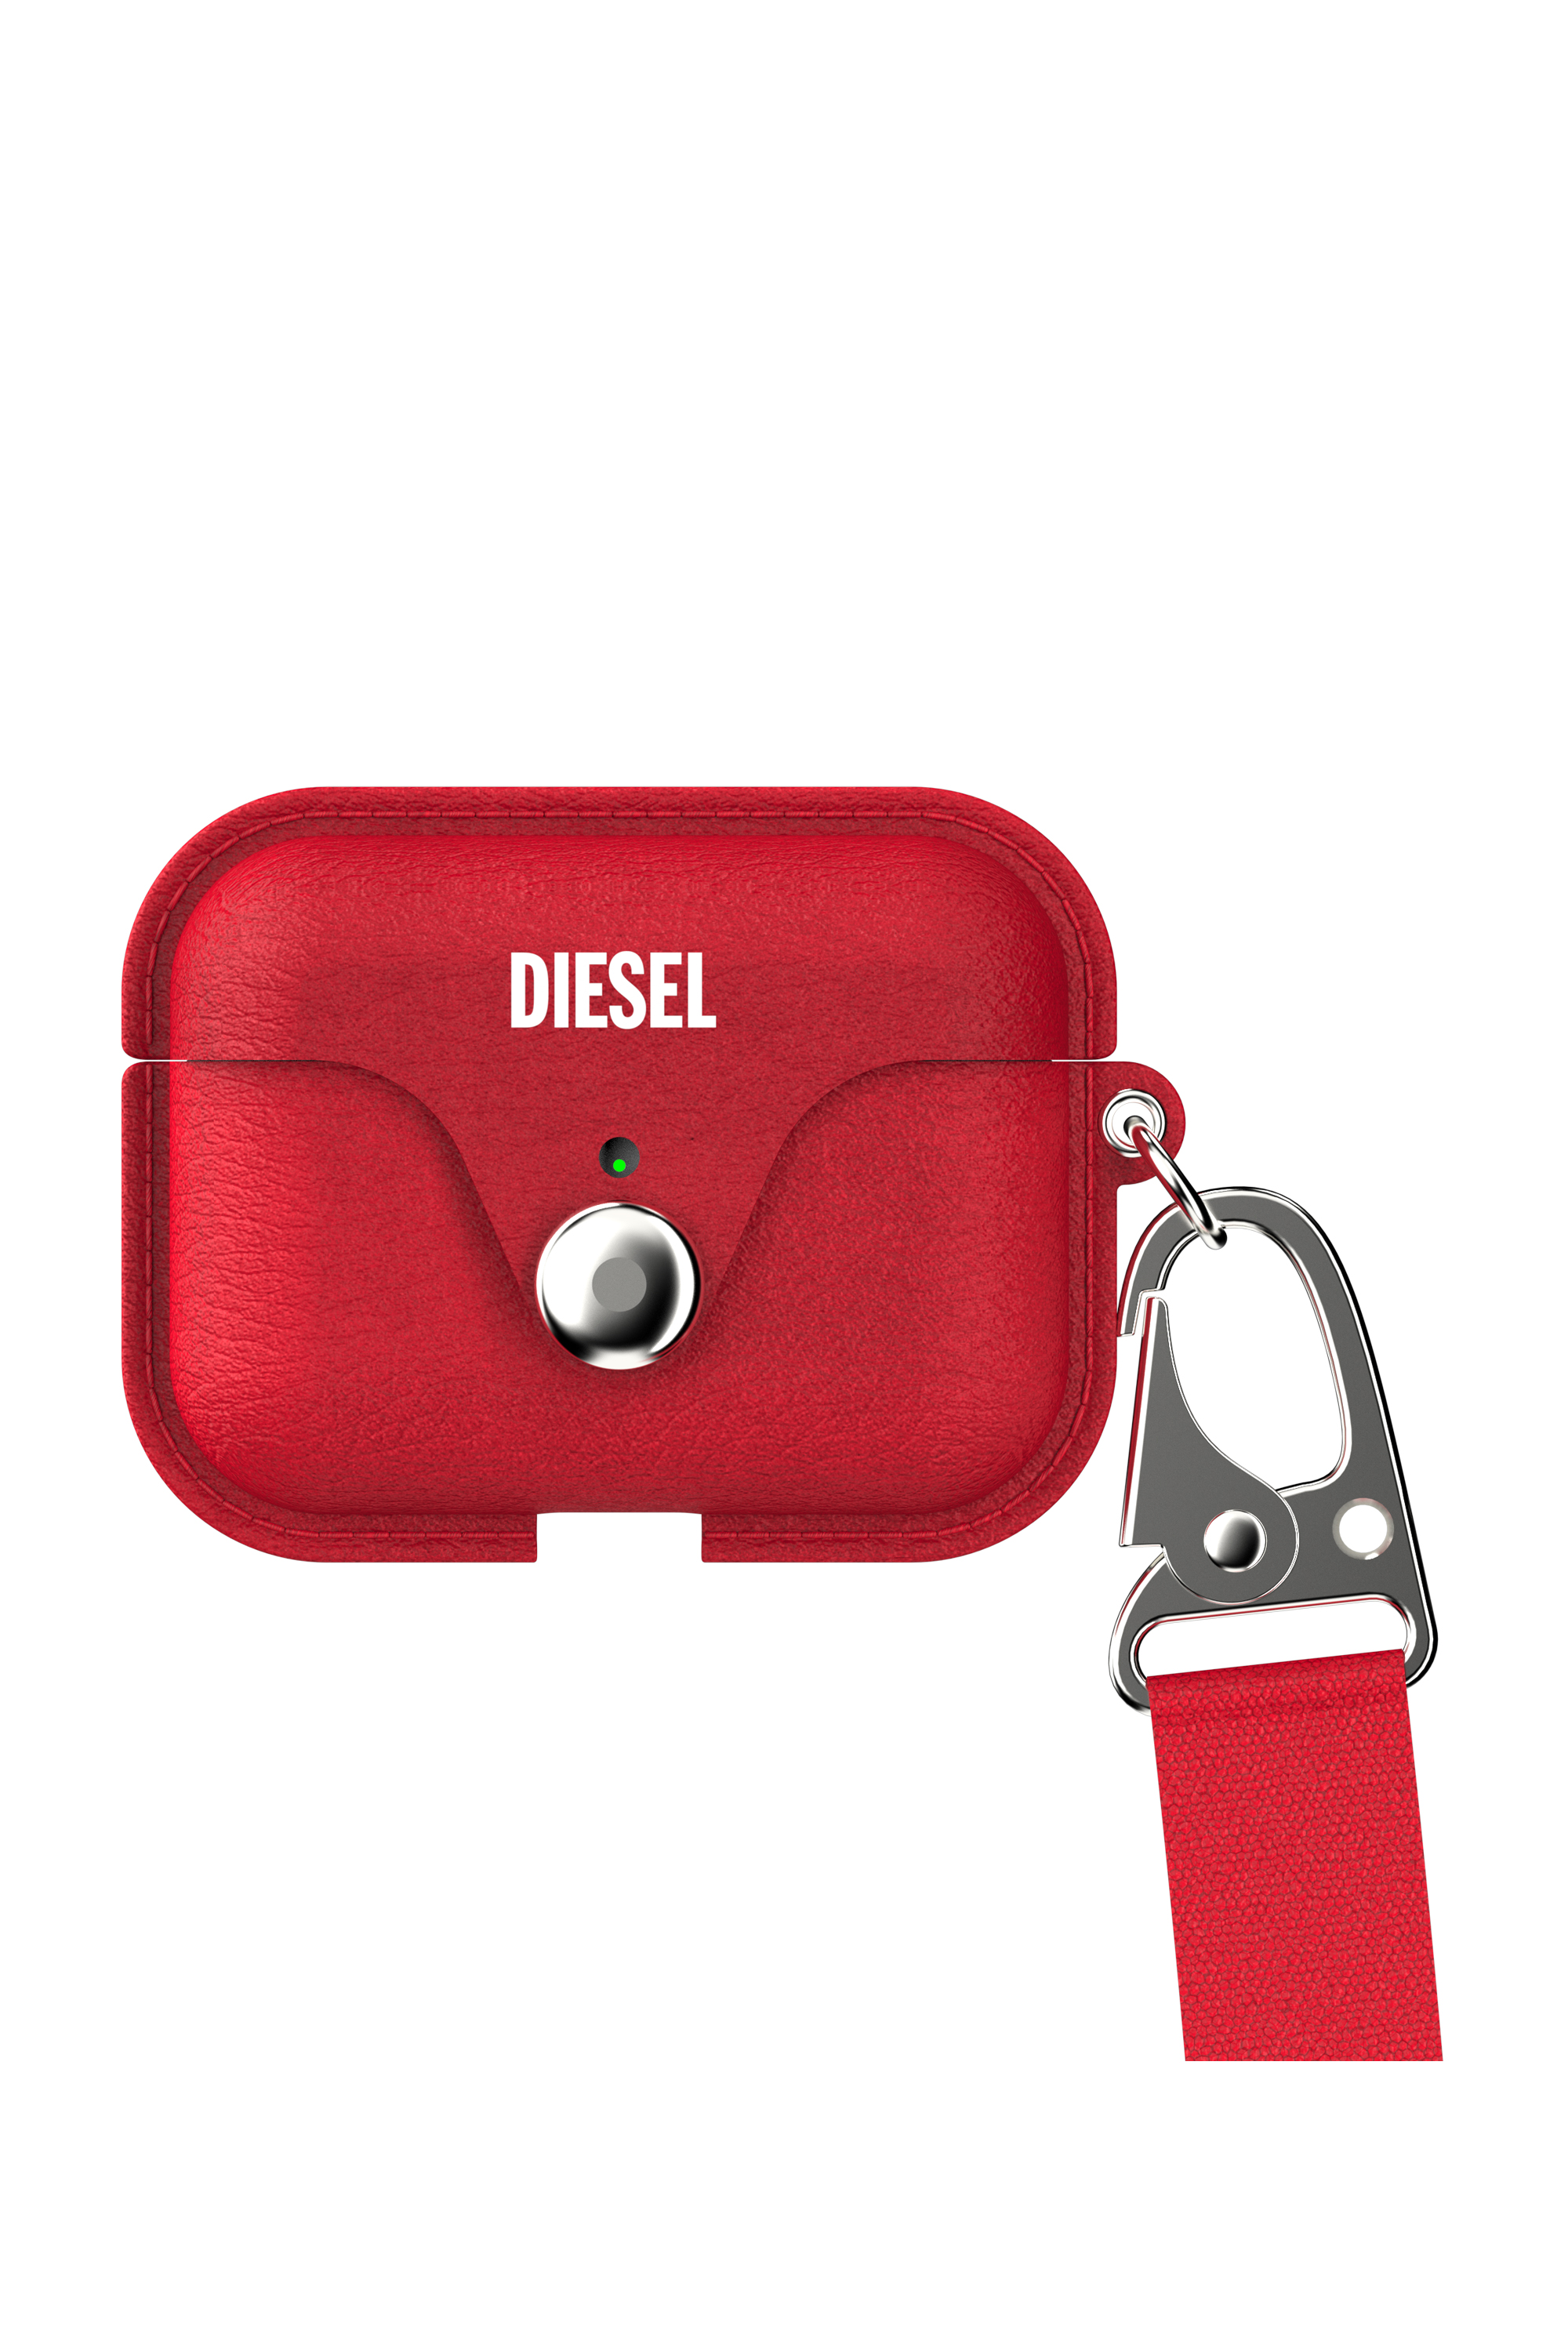 Diesel - 49860 AIRPOD CASE, Rojo - Image 1